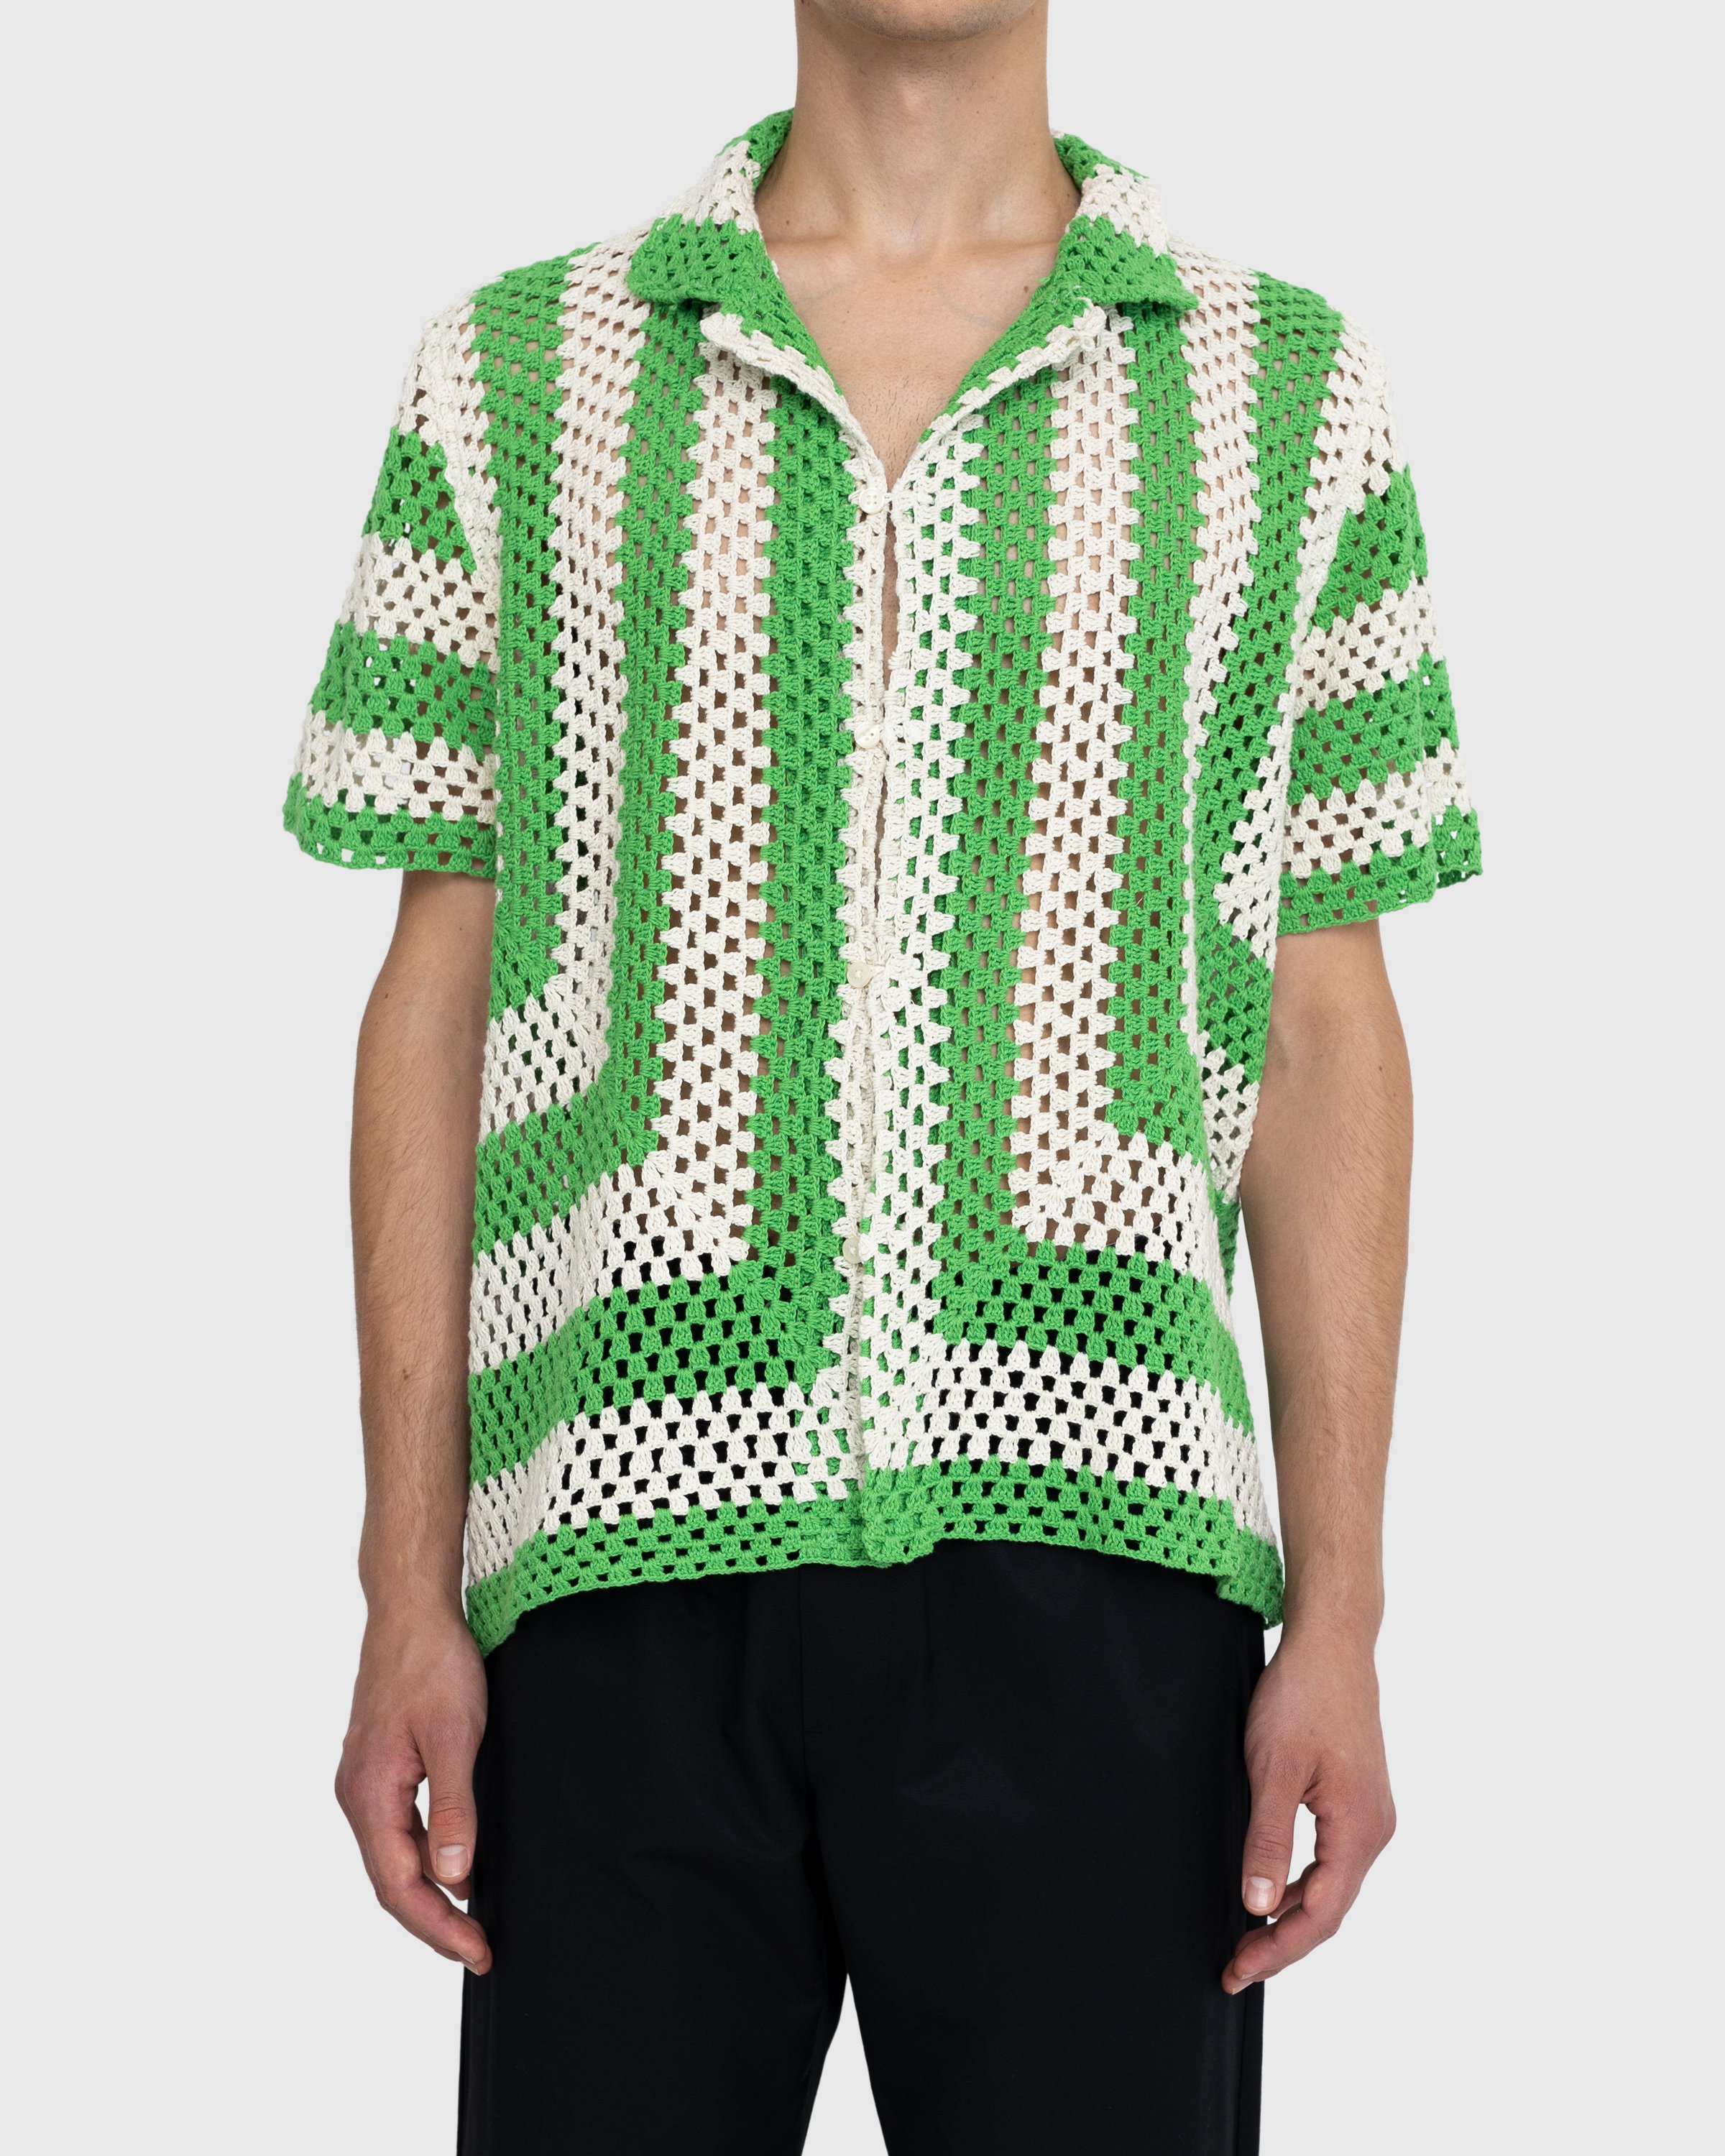 Bode - Crochet Shirt Green - Clothing - Green - Image 2